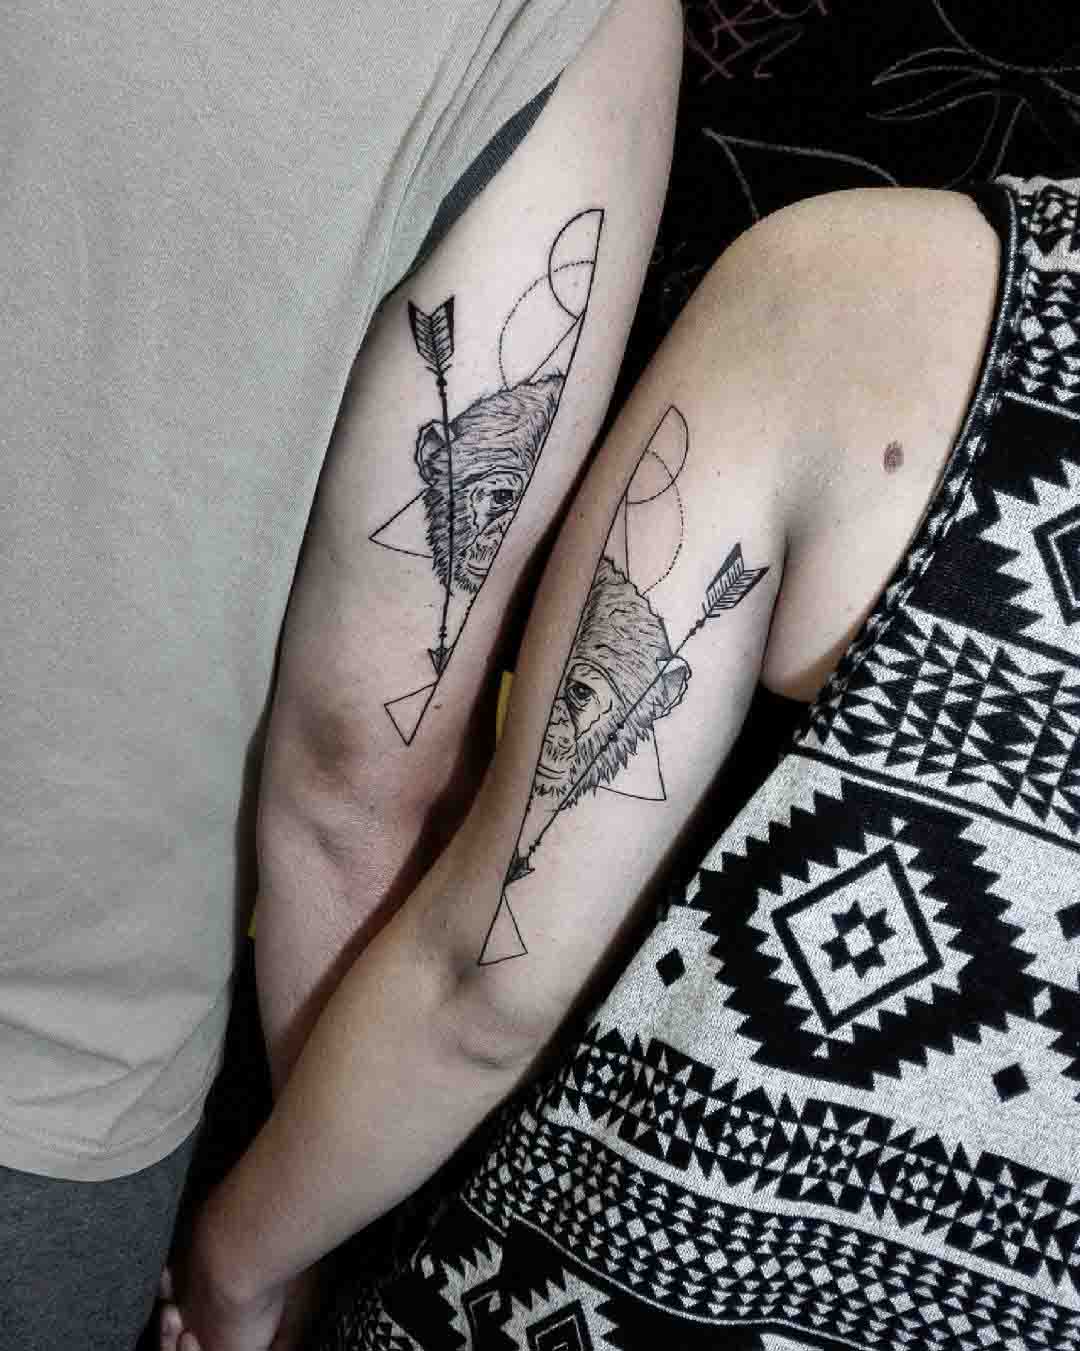 Matching Couple Tattoos Ideas - Best Tattoo Ideas Gallery